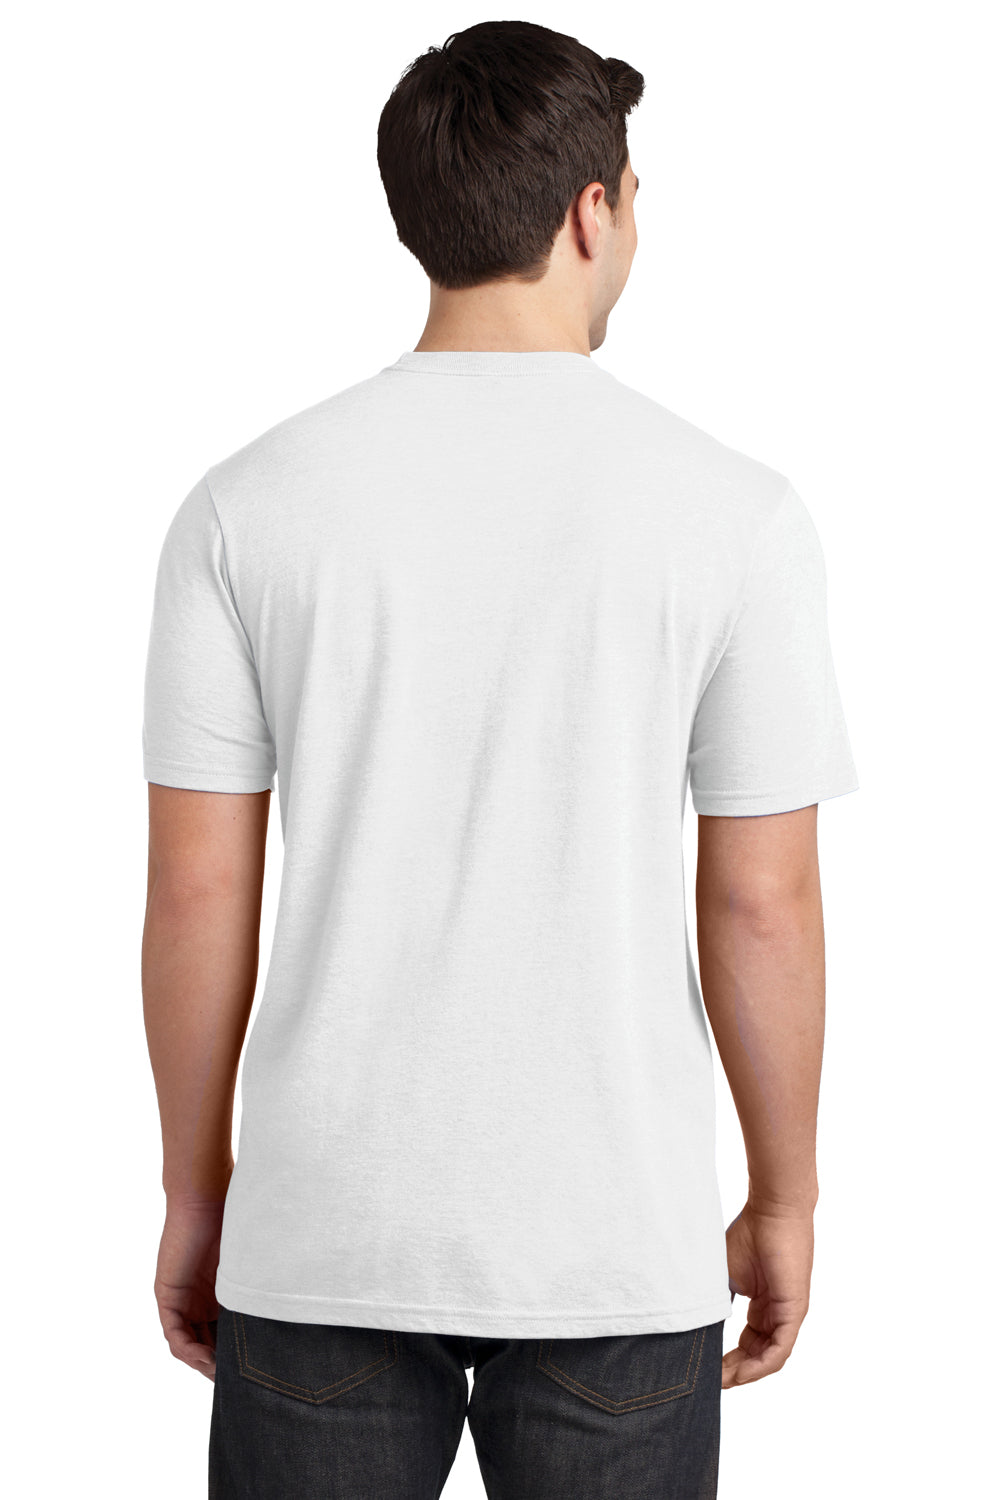 District DT6000P Mens Very Important Short Sleeve Crewneck T-Shirt w/ Pocket White Back